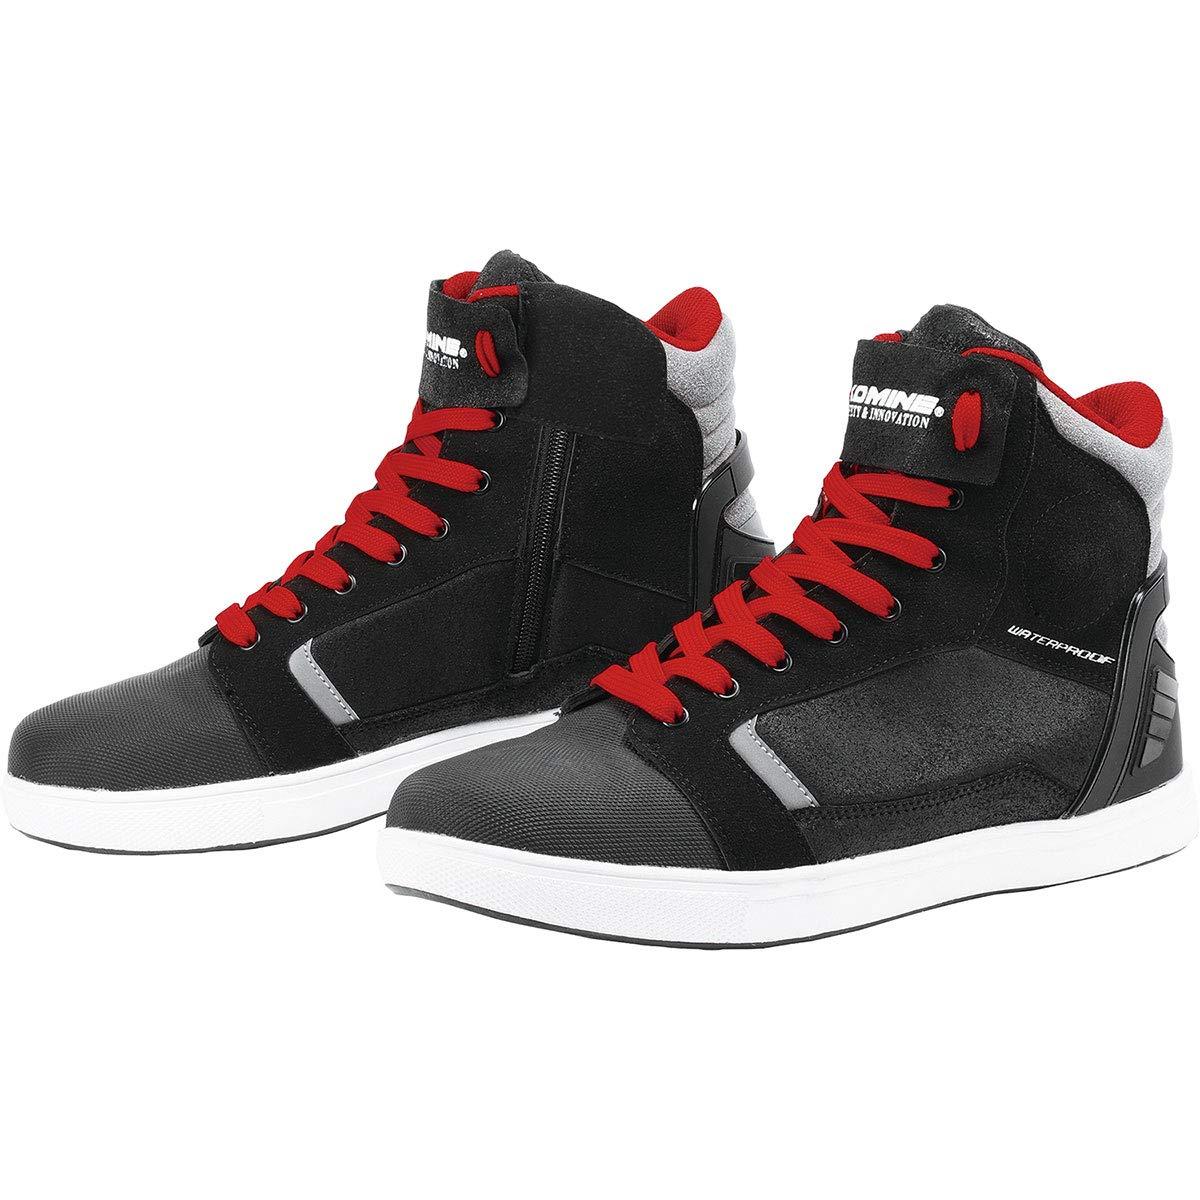 BK-084 Protect WP Riding Sneaker i:05-084 F:Black TCY:24.5